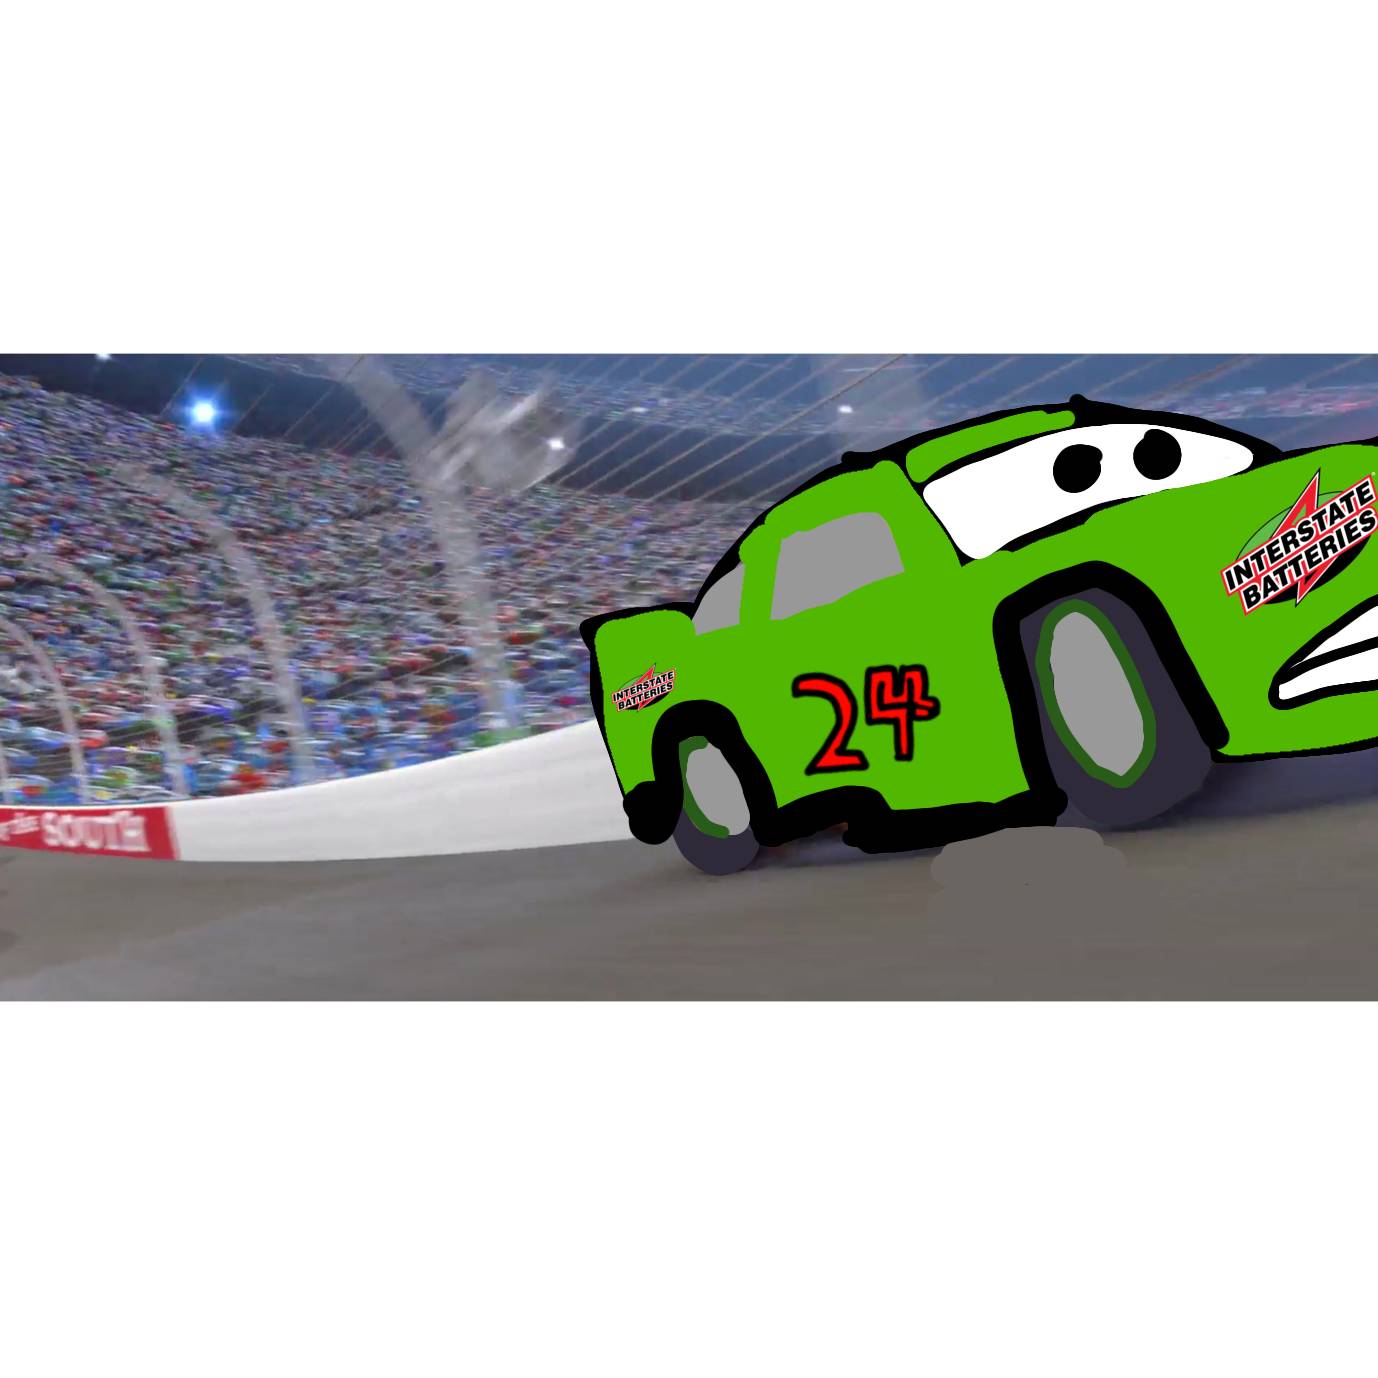 Cars 3 crash toy meme by thearist2013 on DeviantArt